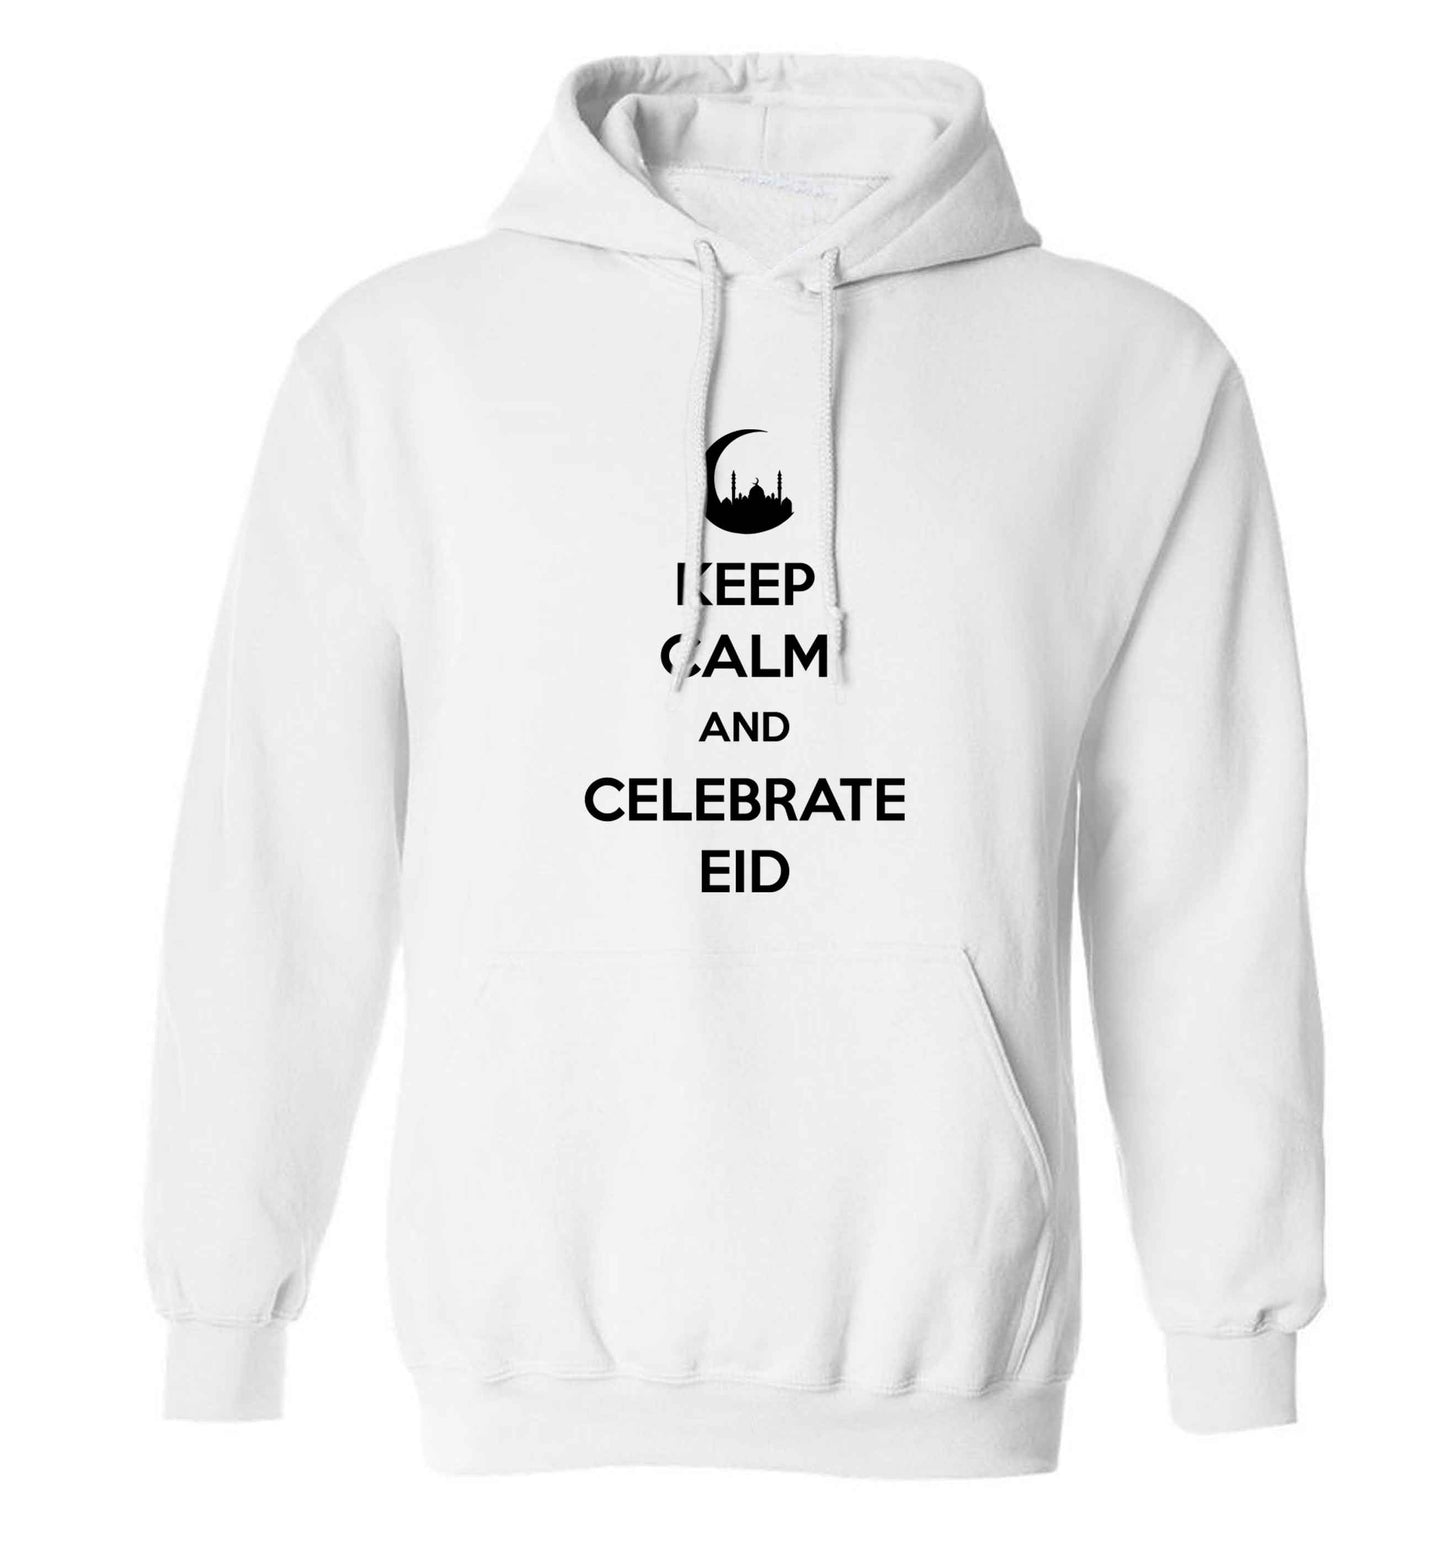 Keep calm and celebrate Eid adults unisex white hoodie 2XL